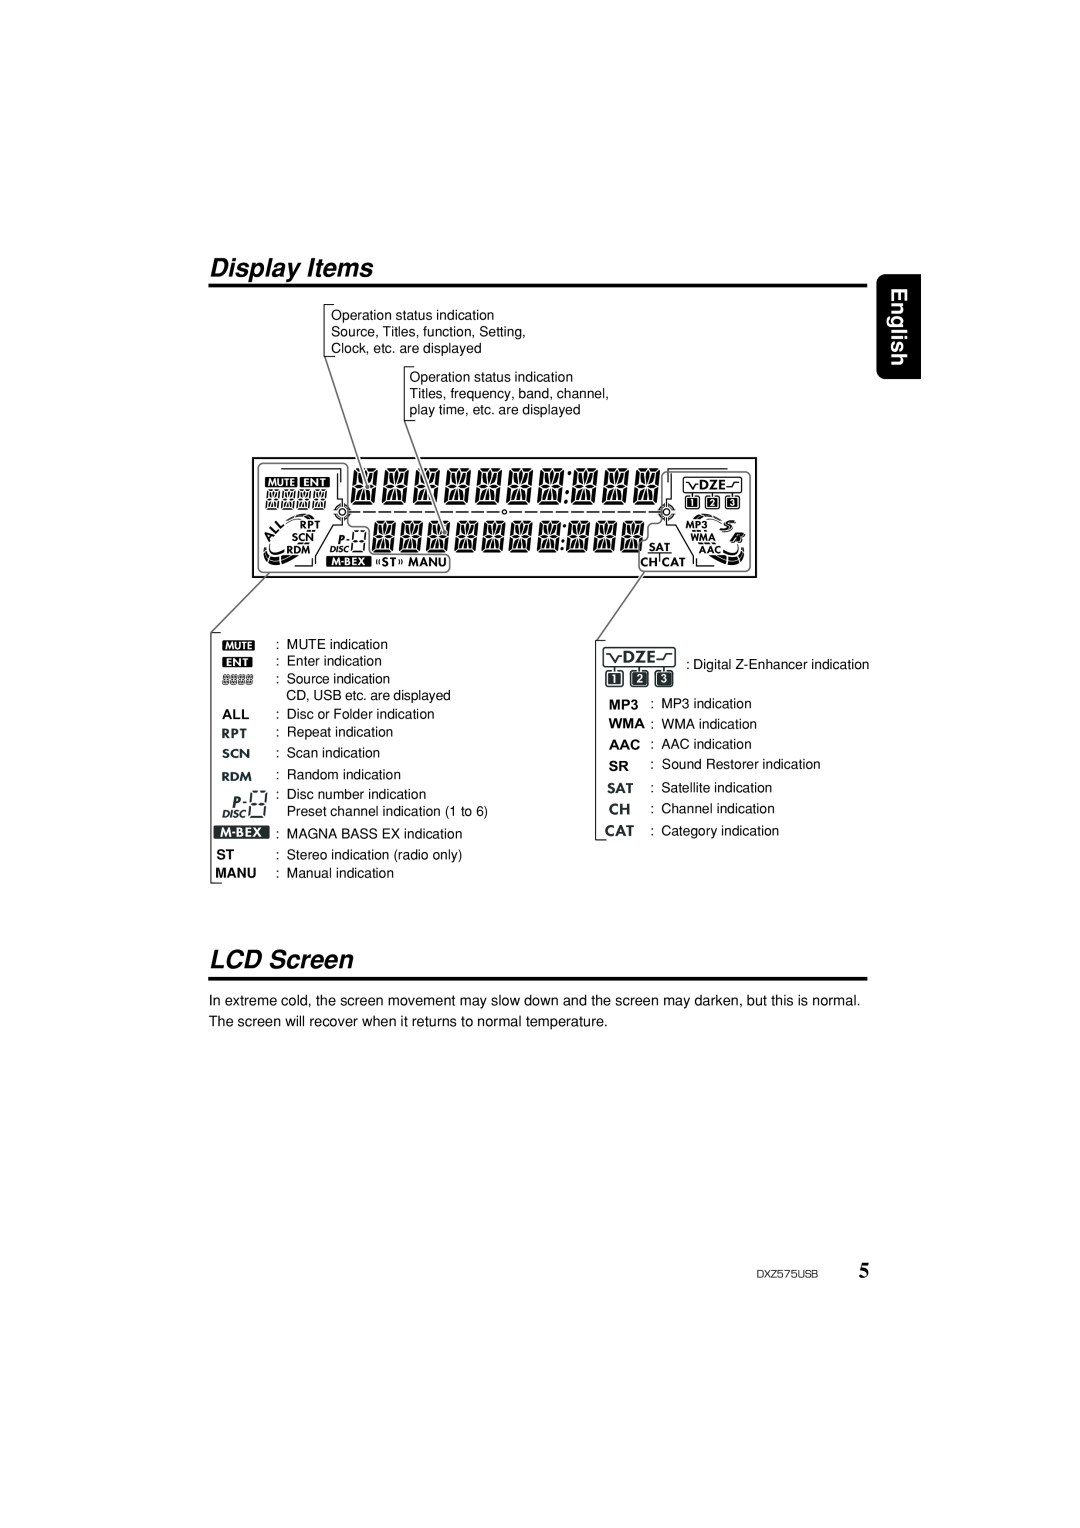 Clarion DXZ575USB owner manual Display Items, LCD Screen, English, Manu 